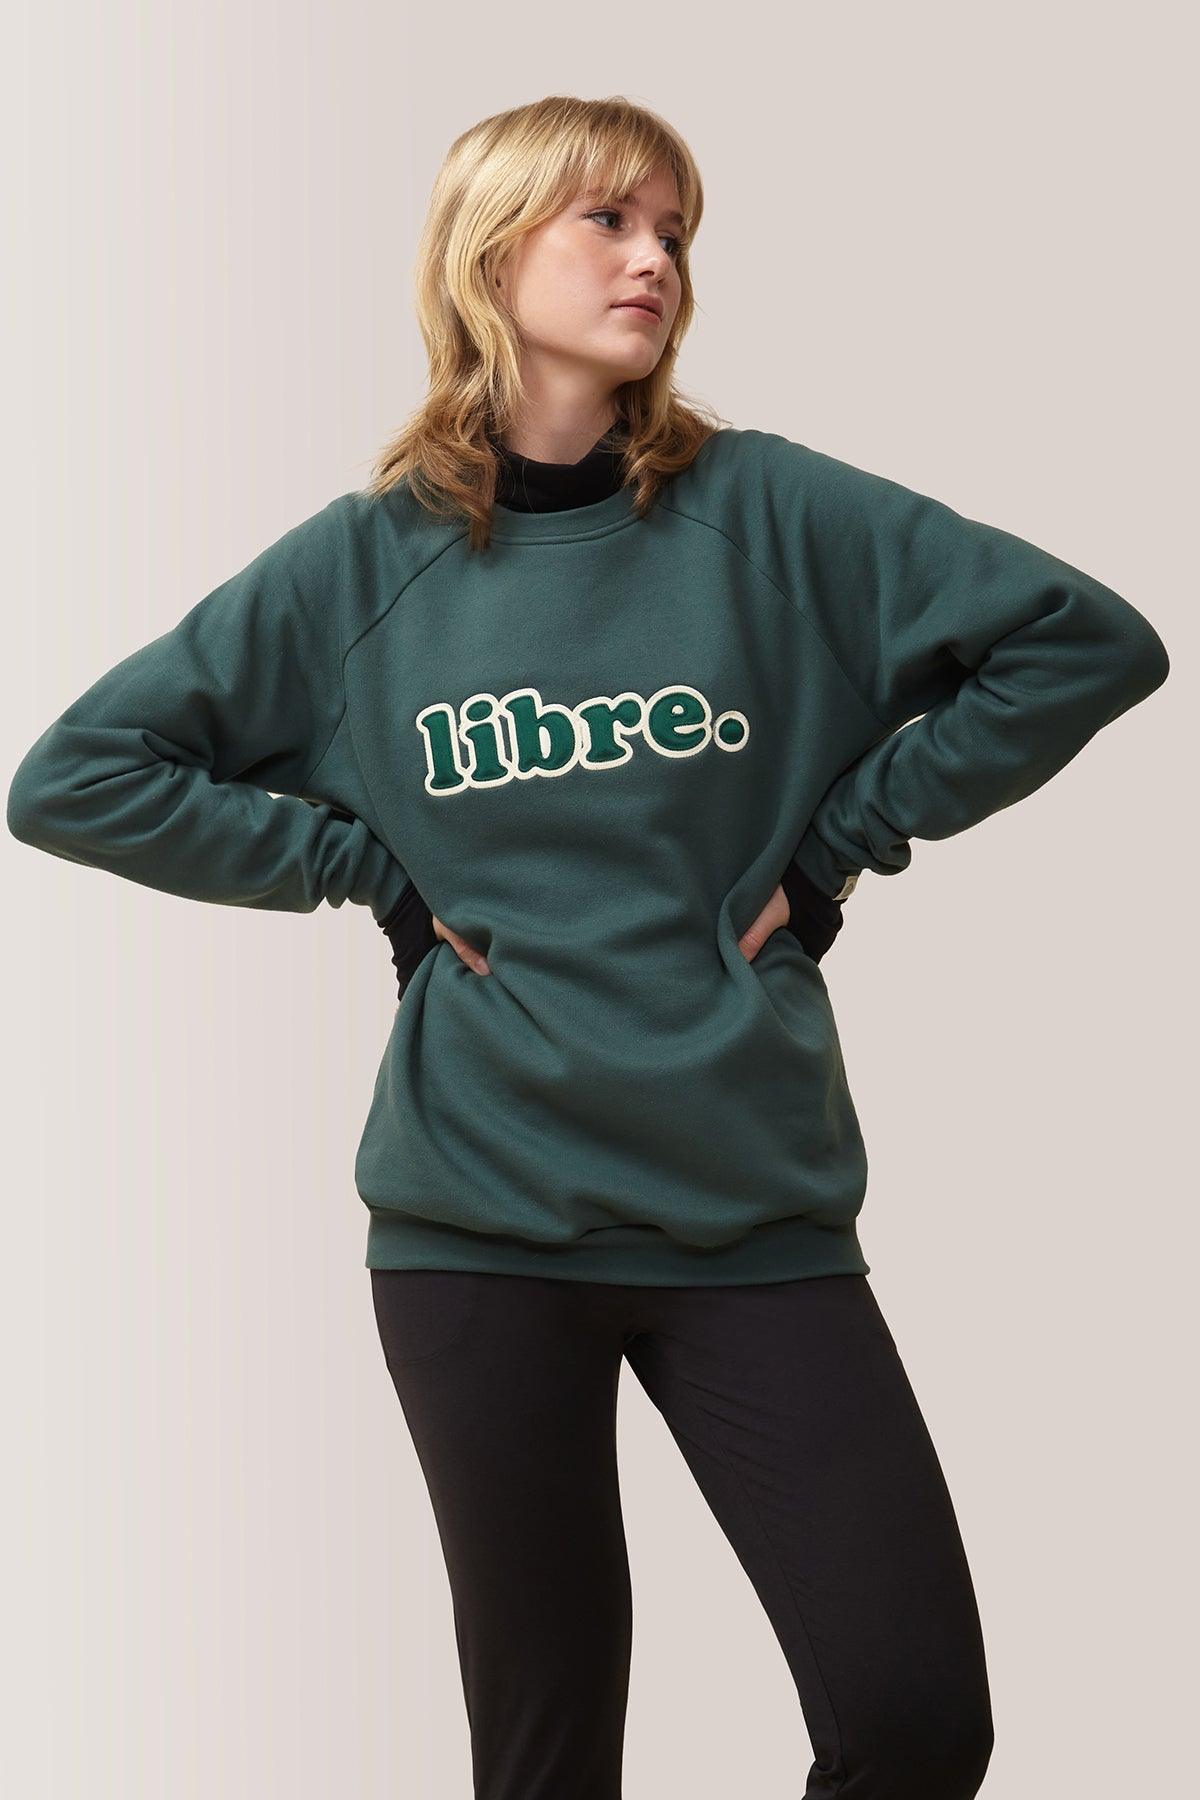 Femme qui porte le chandail LIBRE de Rose Boreal./ Women wearing the LIBRE Boyfriend Sweater by Rose Boreal. -Cypress